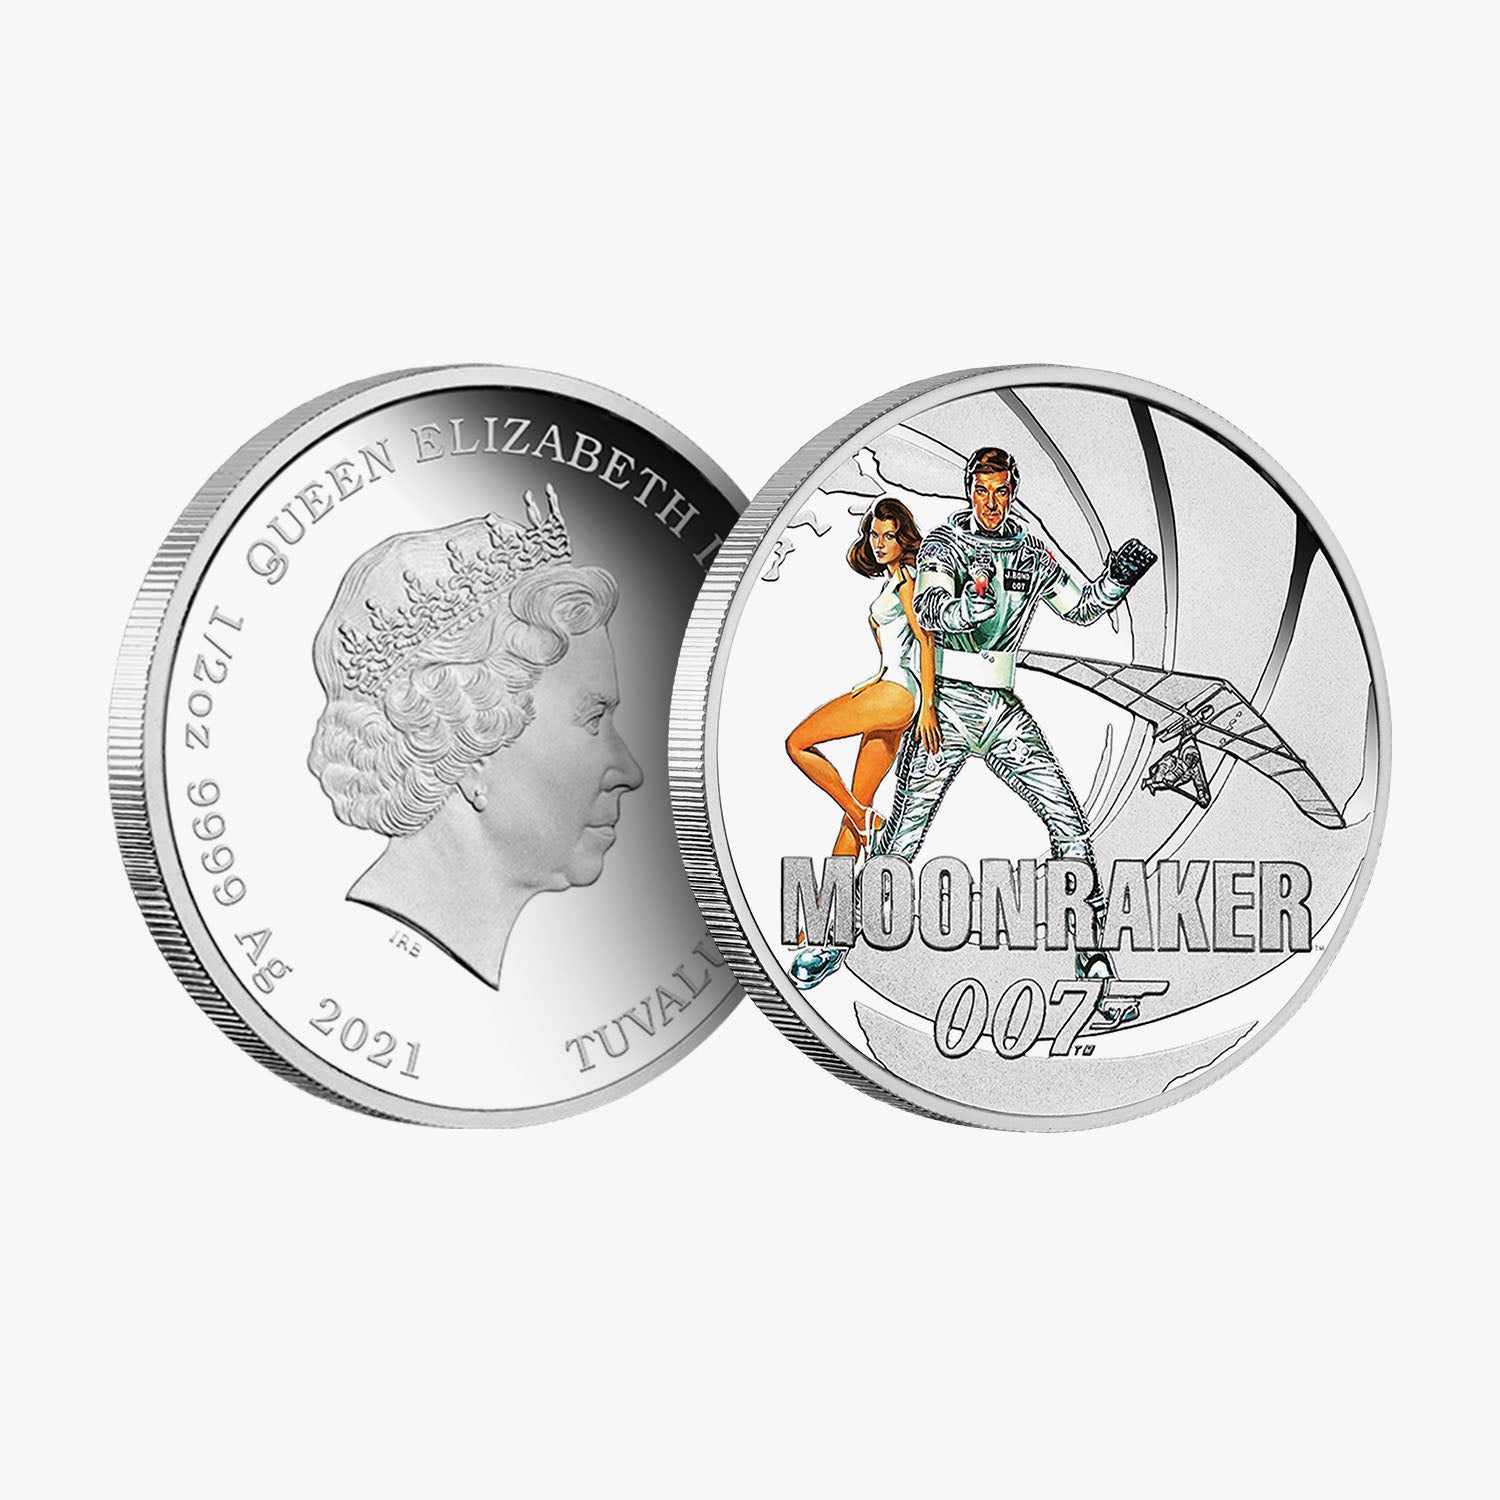 James Bond - Moonraker Solid Silver Movie Coin